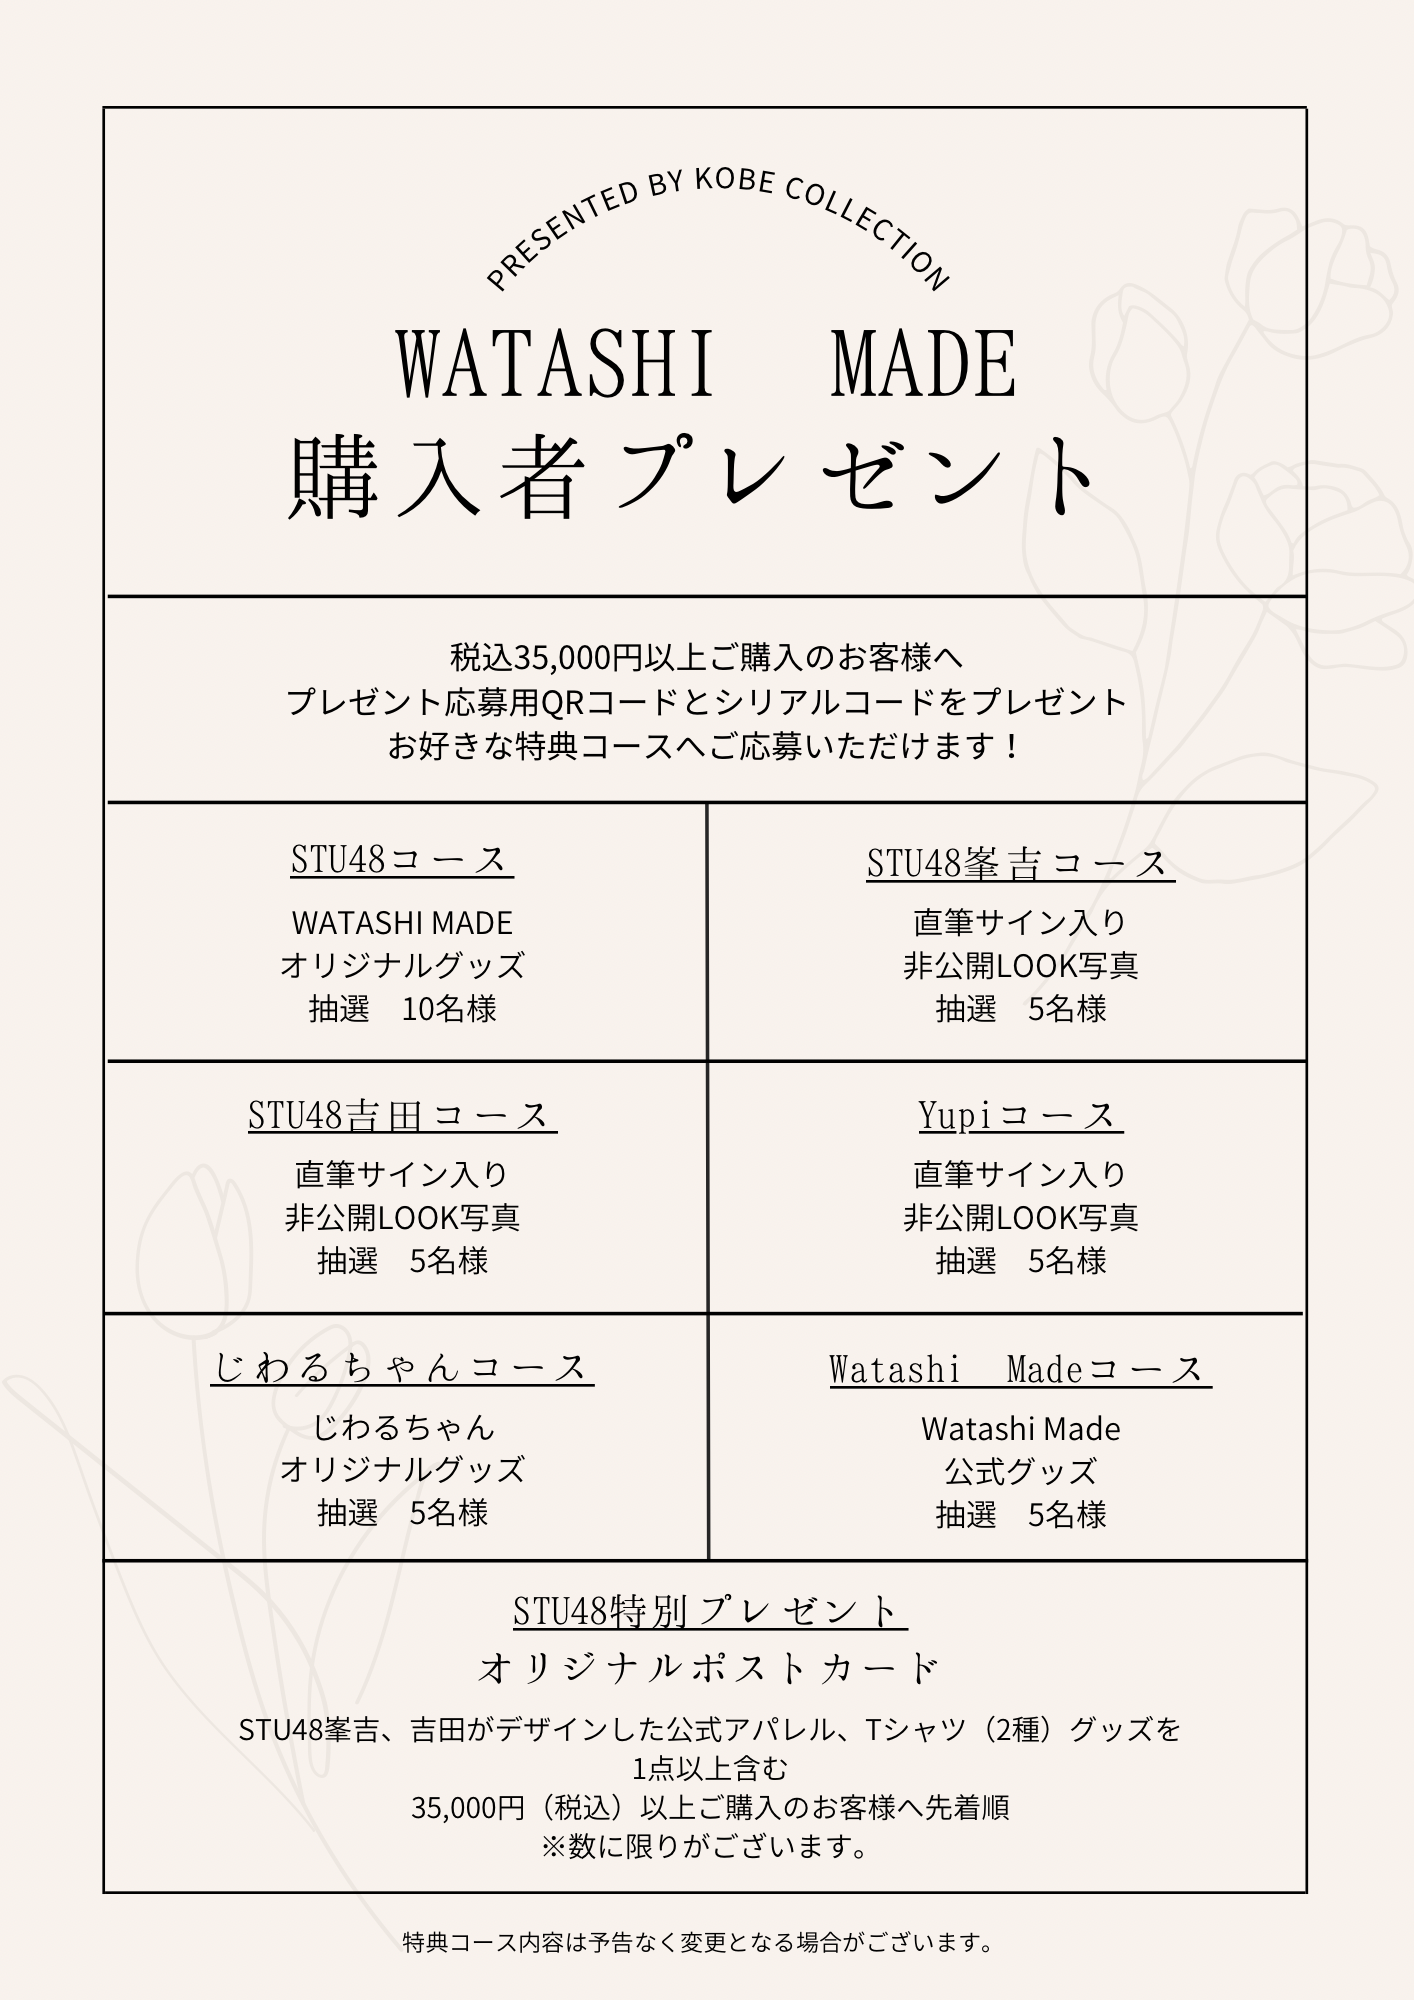 WatashiMade Original Goods combi porch